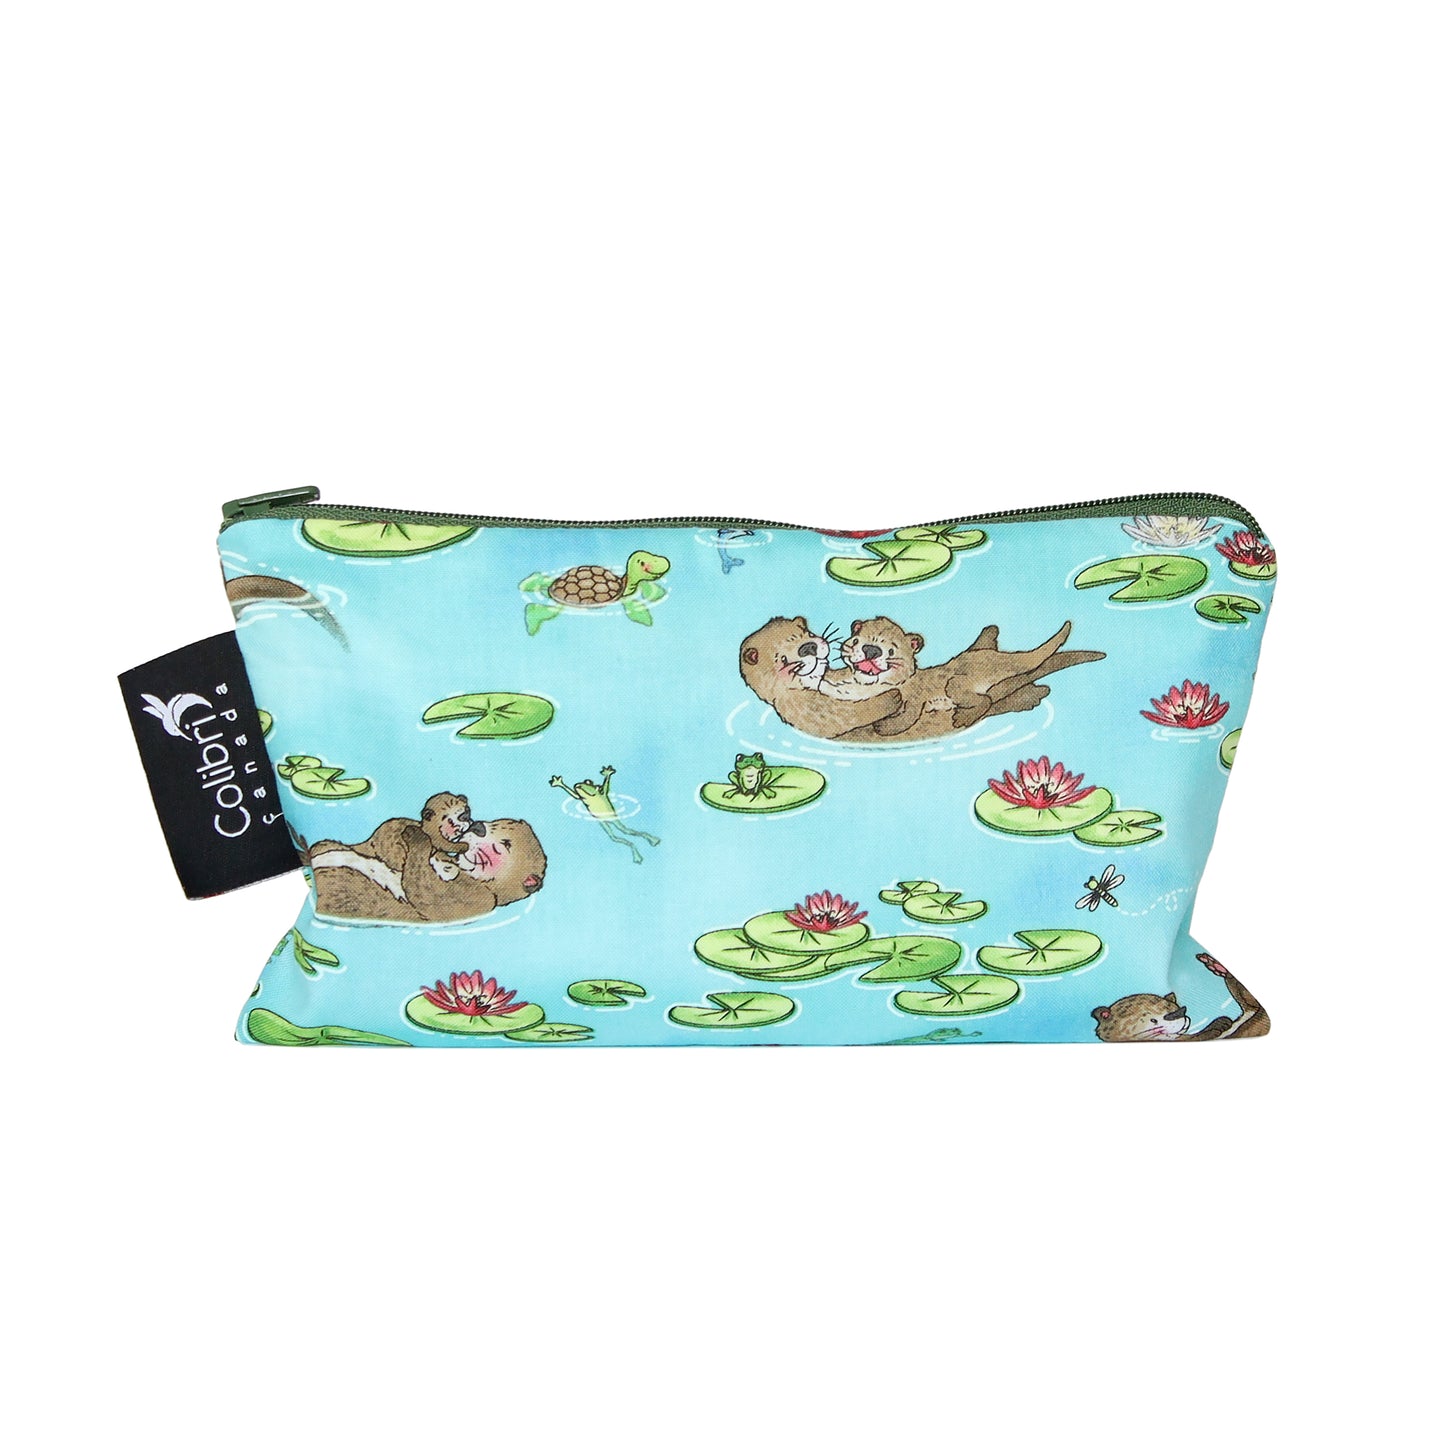 8143 - Otters Reusable Snack Bag - Medium